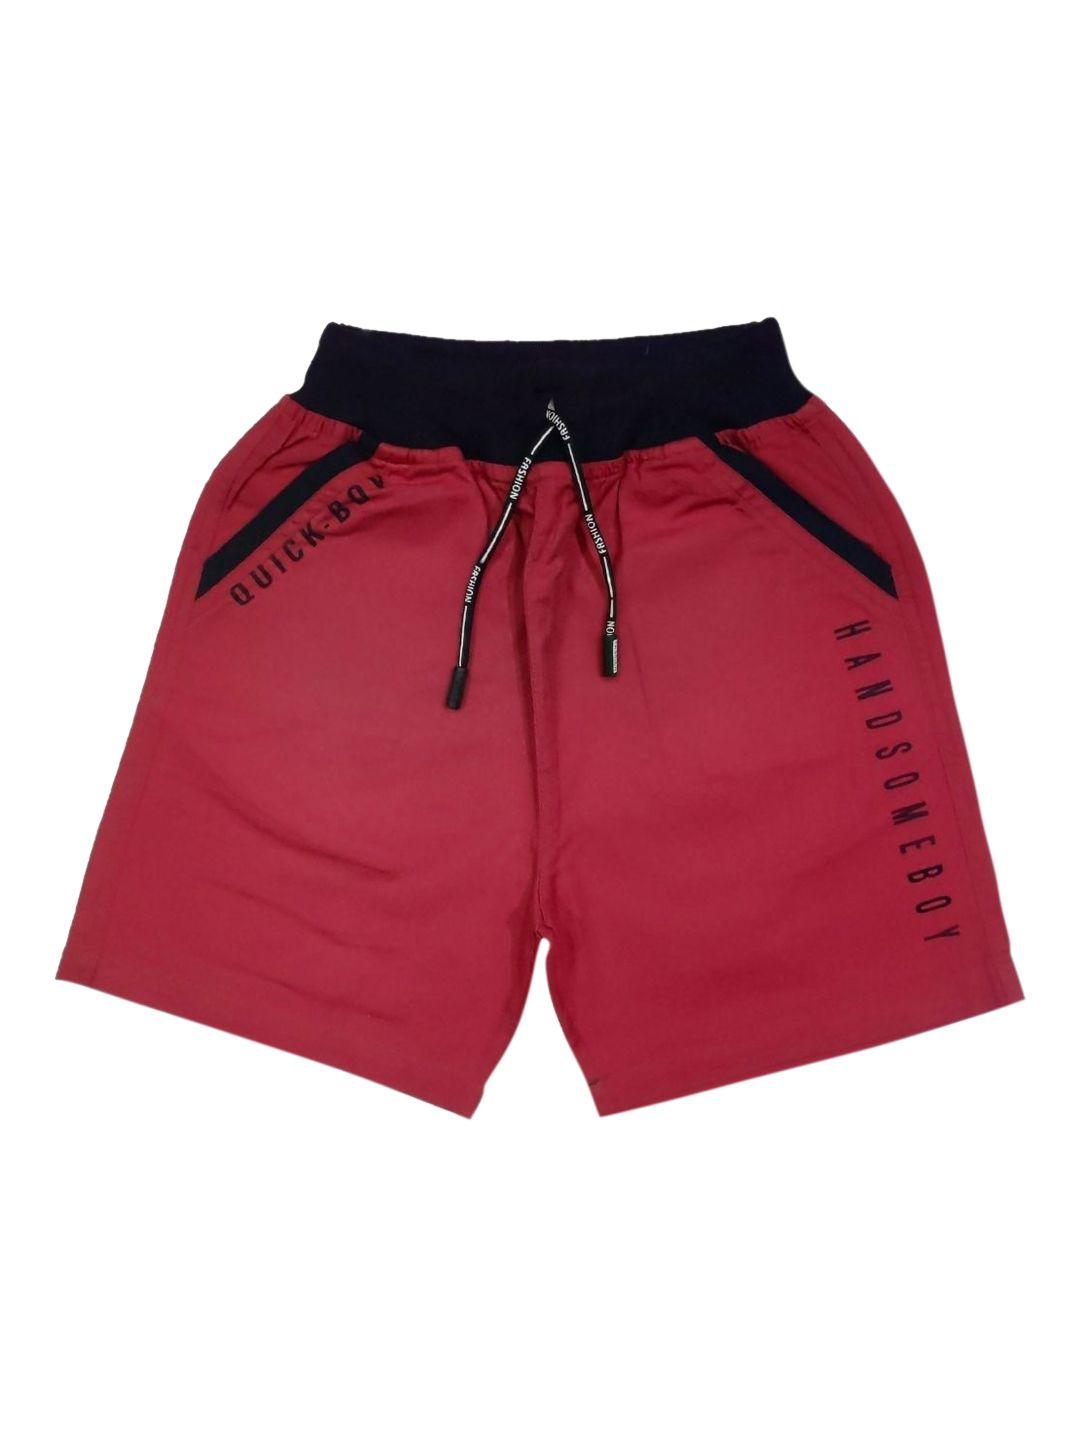 vedana boys red & black printed pure cotton shorts